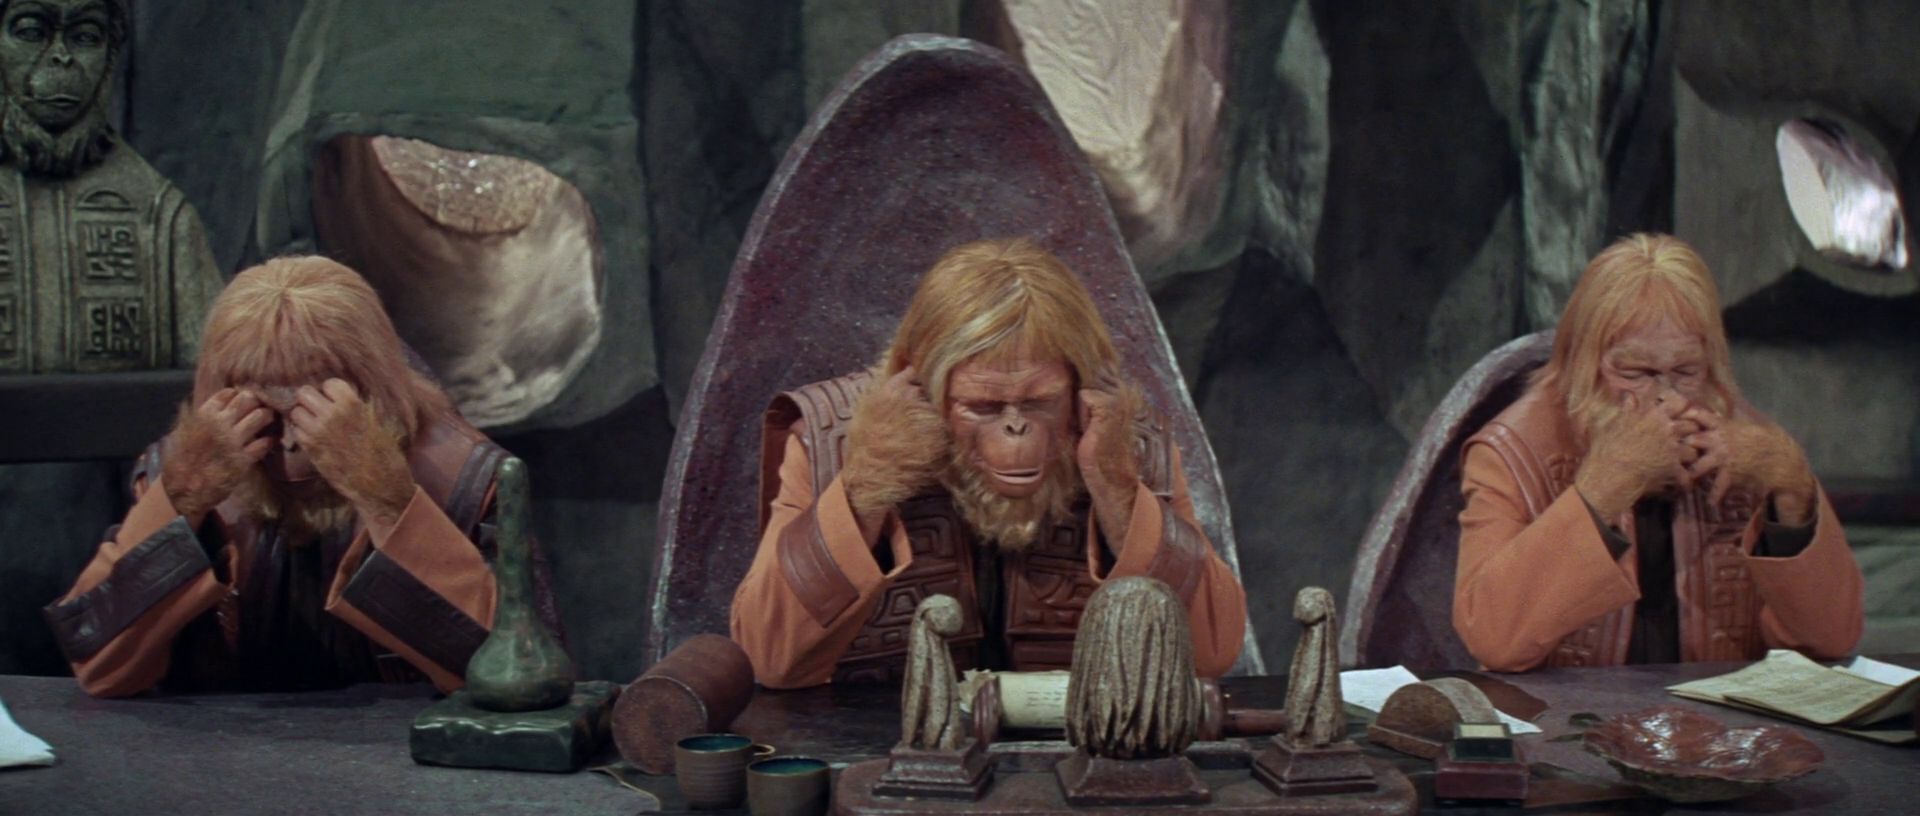 Планета обезьян кадры из фильма 1968